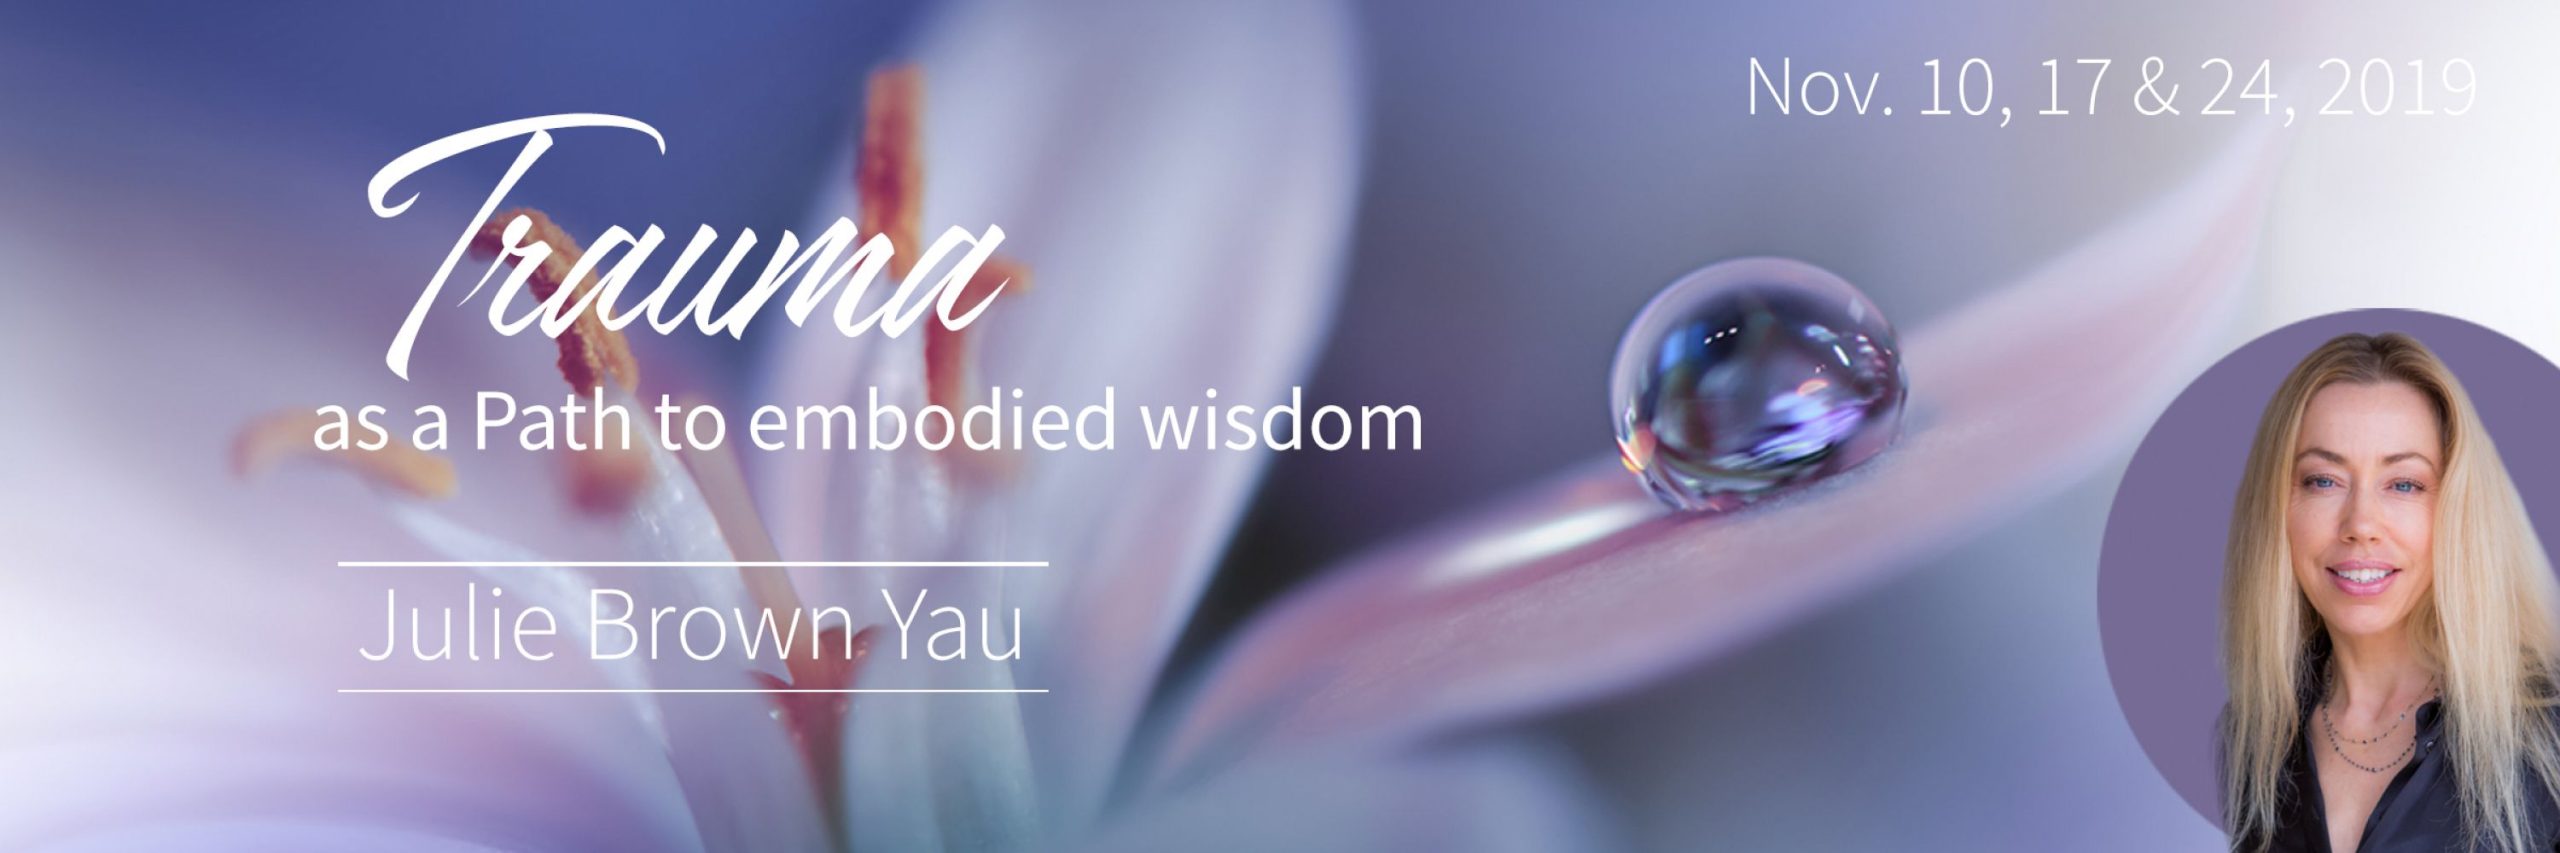 Julie Brown Yau - Trauma as a Path to Embodied Wisdom 1